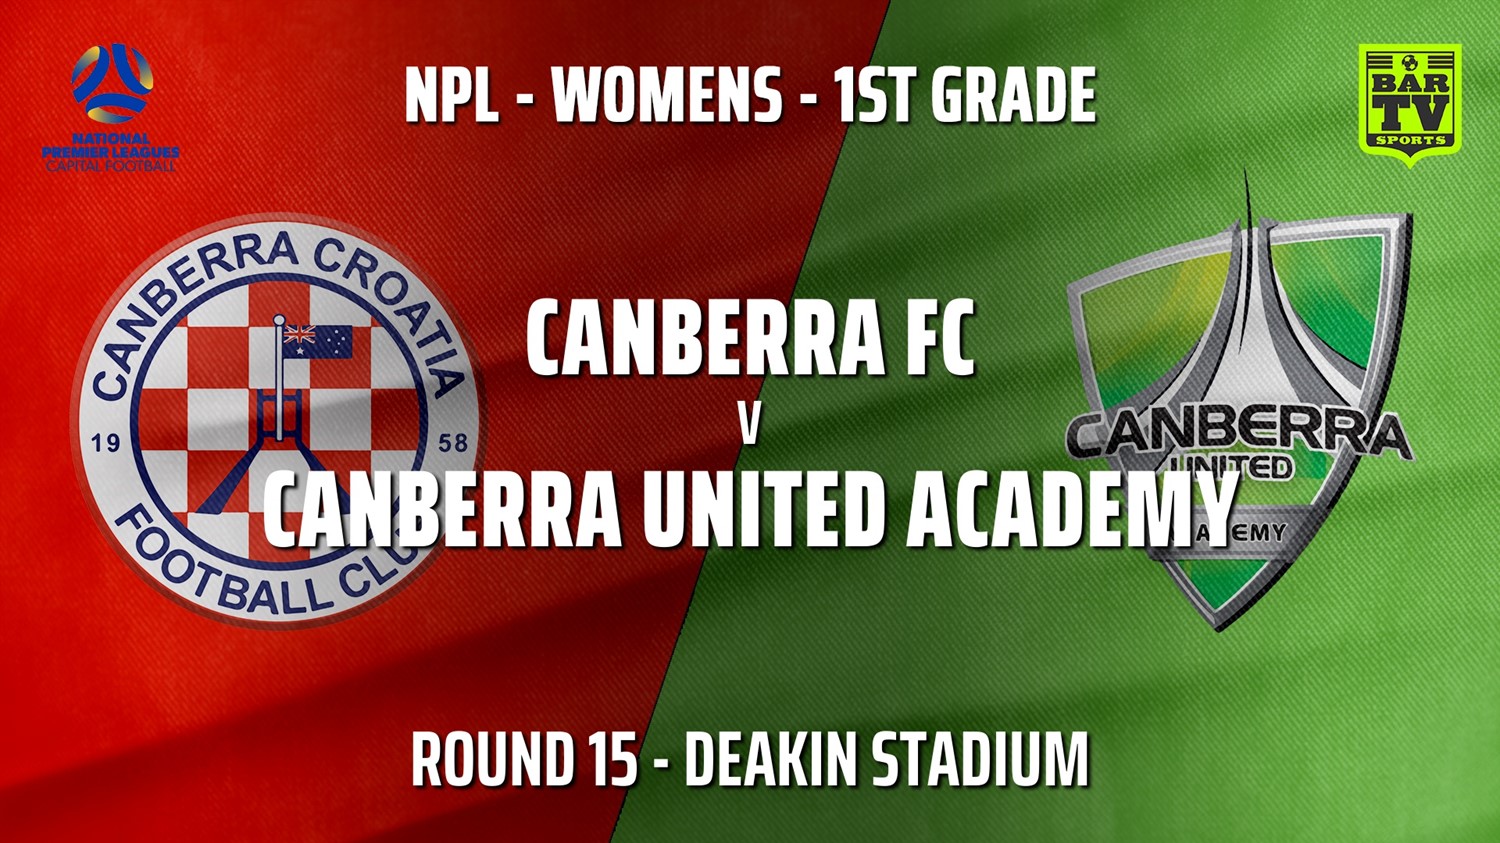 210725-Capital Womens Round 15 - Canberra FC (women) v Canberra United Academy Slate Image